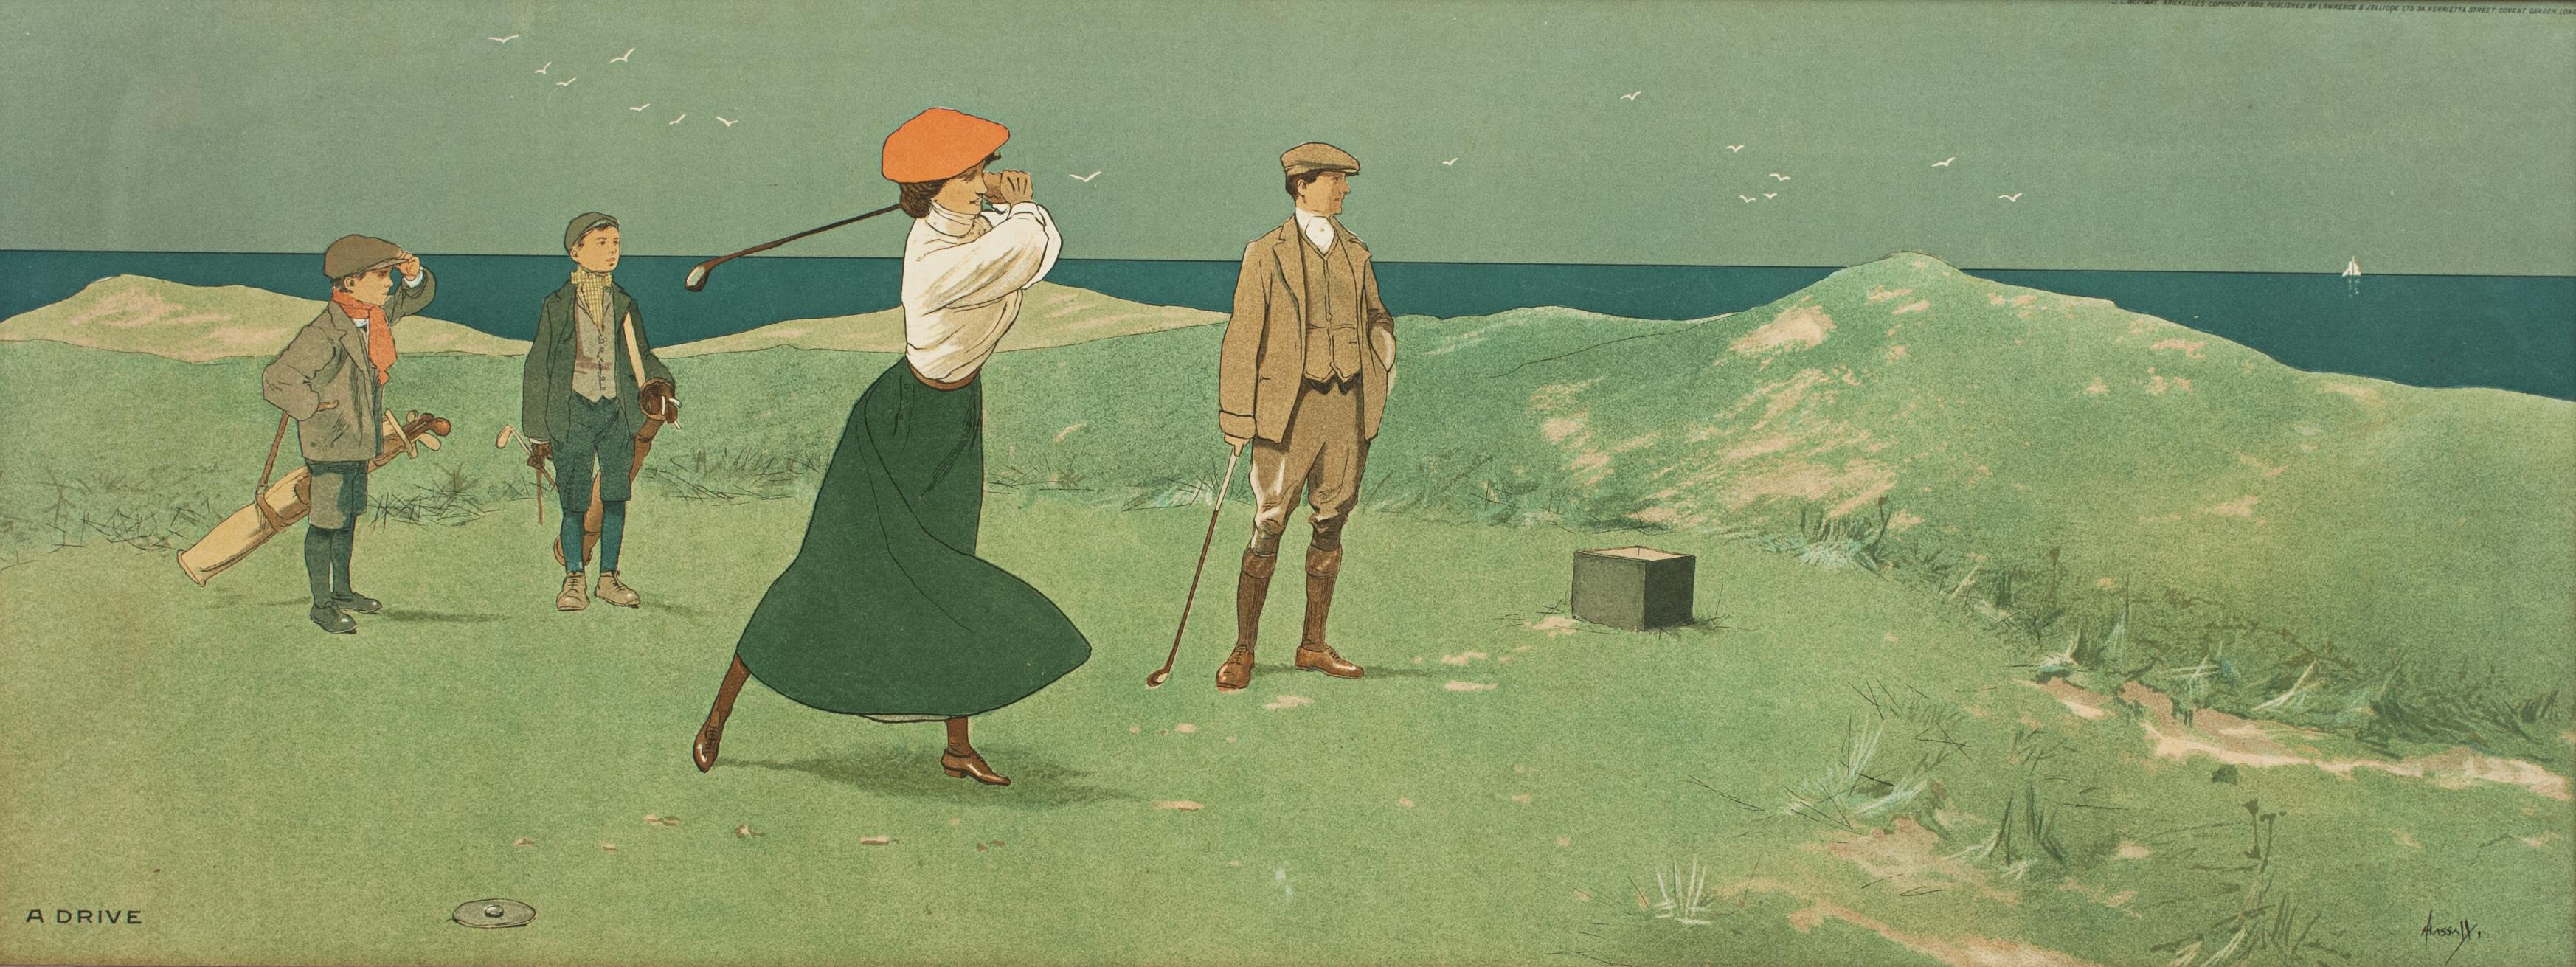 Sporting Art Vintage Golf Print by John Hassall